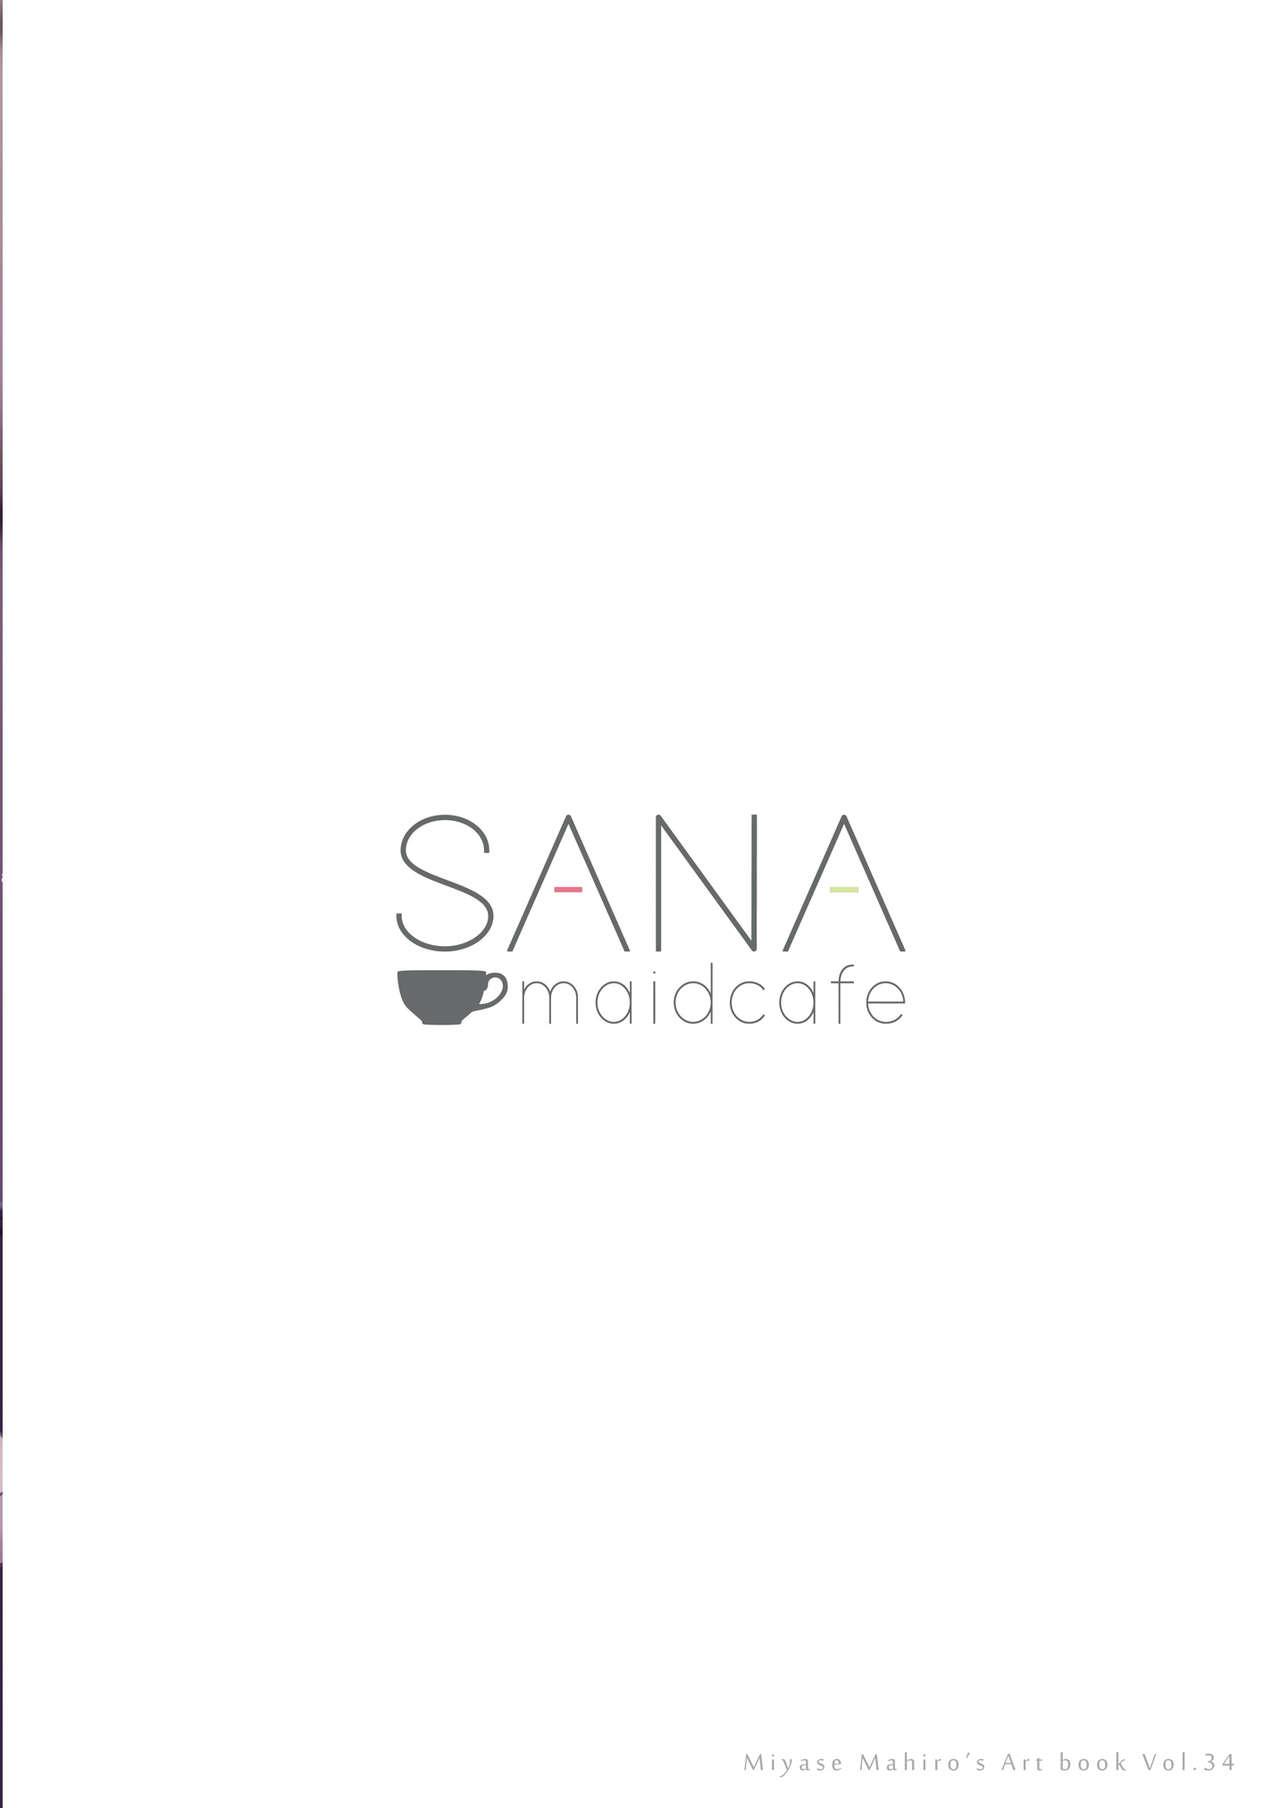 SANA maidcafe + SANA maidcafe 19